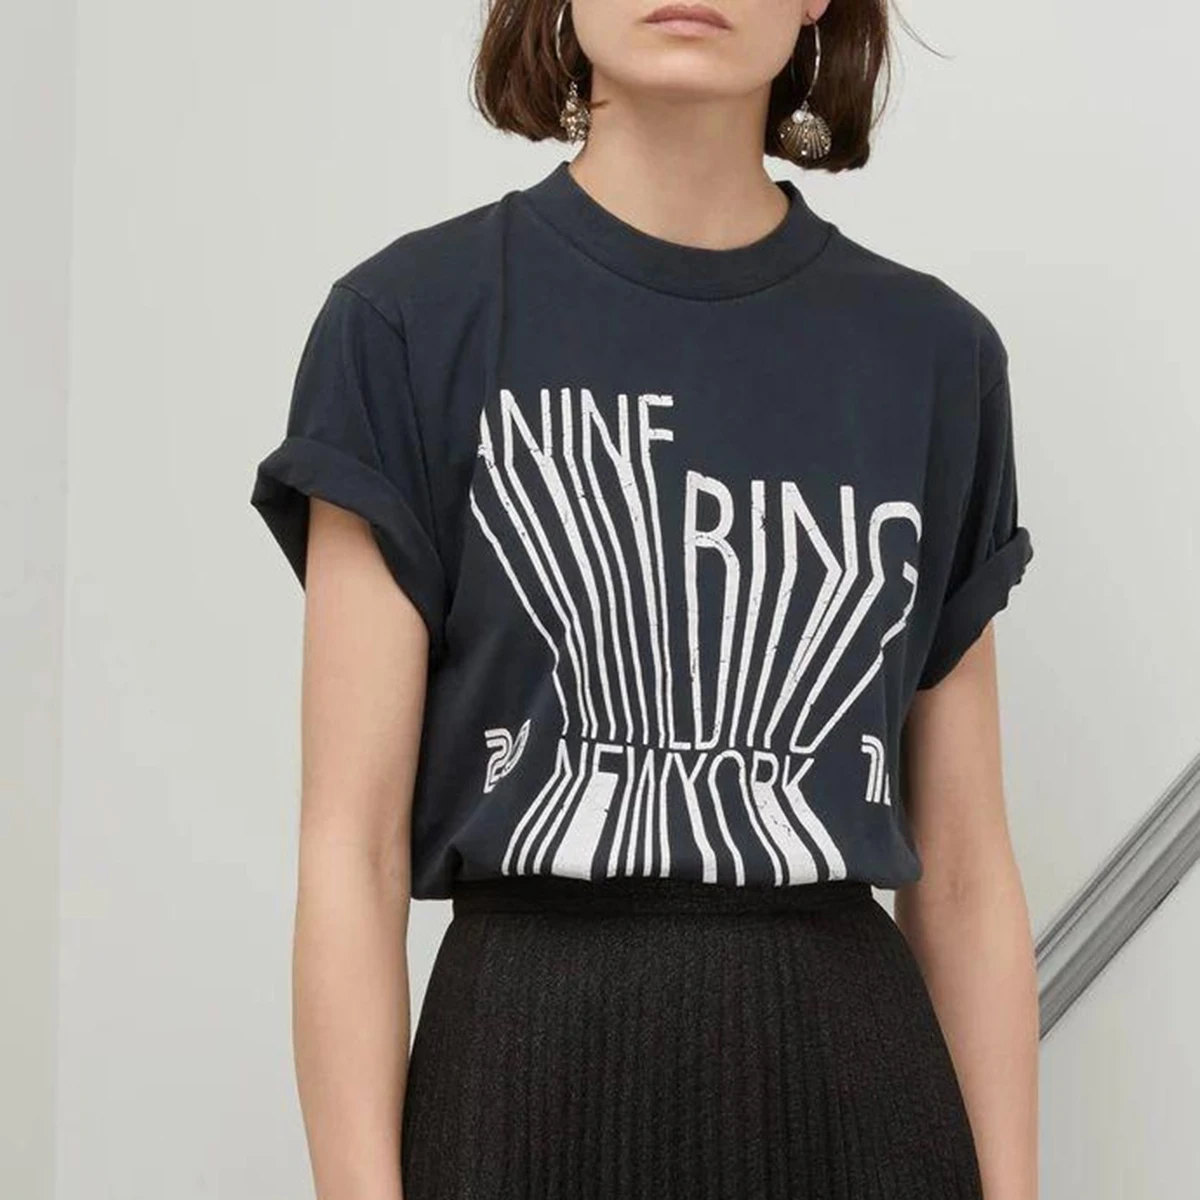 Artistic Text Graphic T-Shirt Women 2021 Summer Rock N Roll Fashion Tops Tshirt Femme Vintage Streetwear Tees